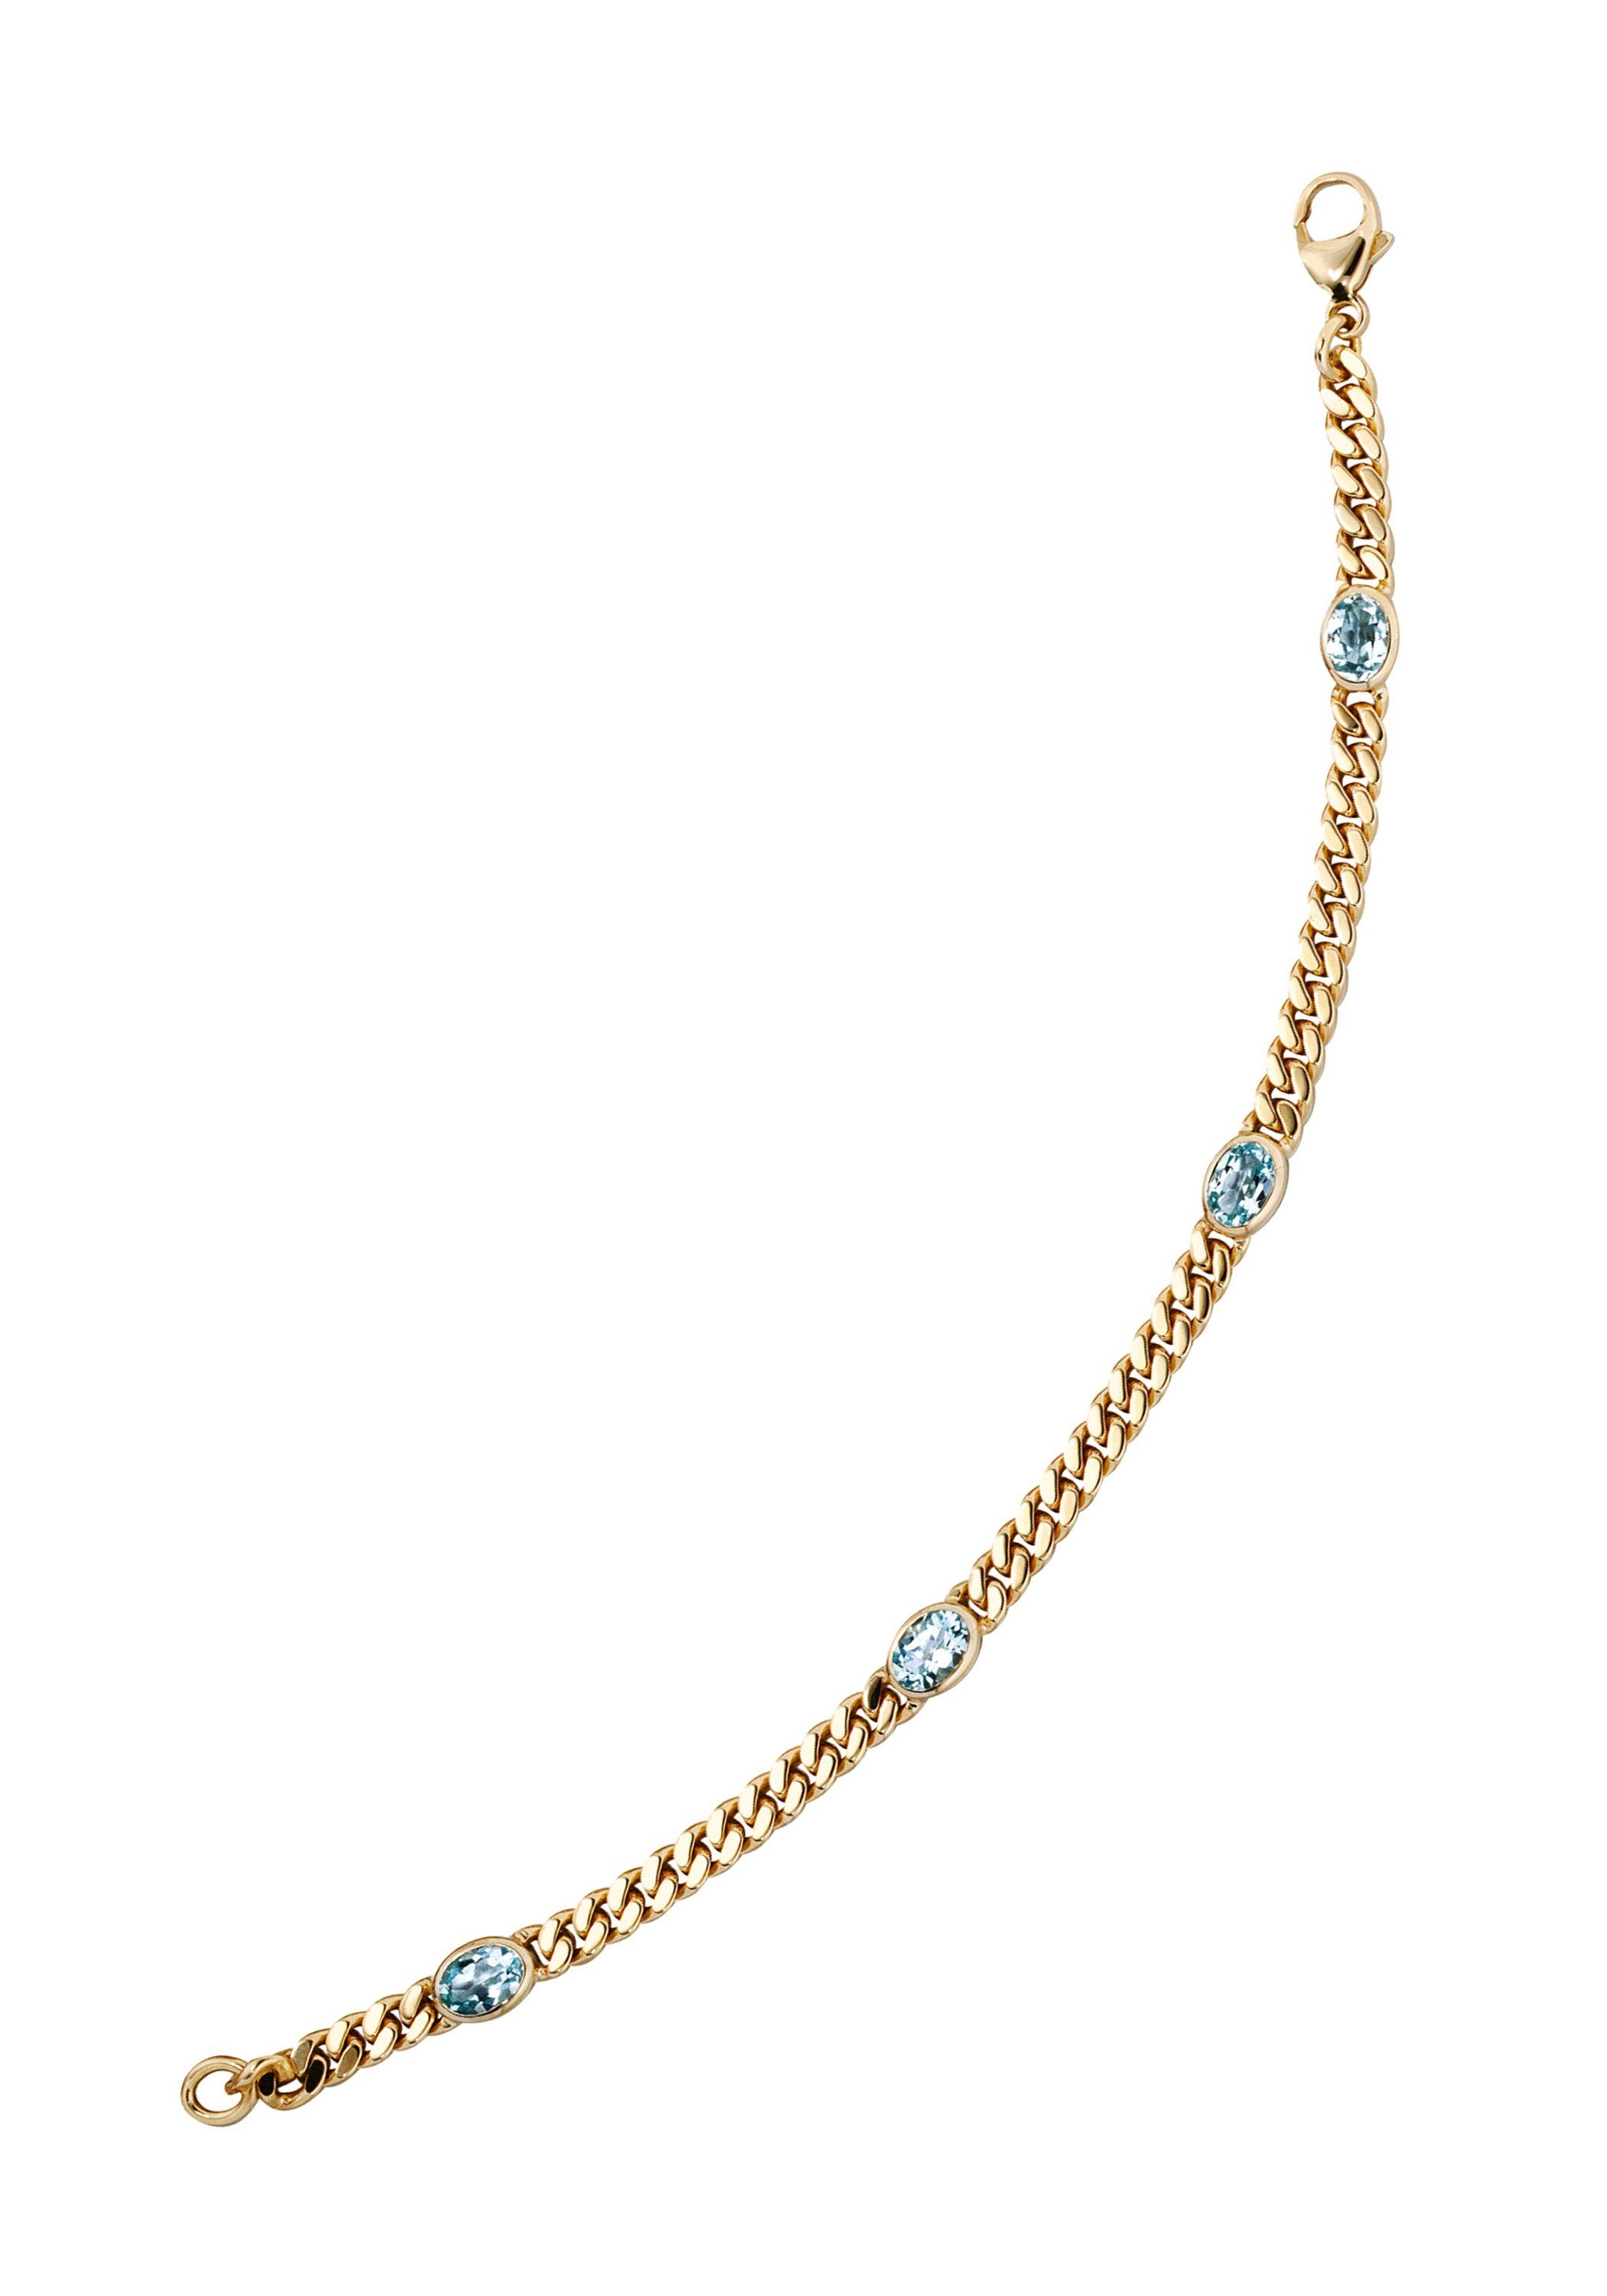 JOBO Goldarmband Armband mit Blautopas, 585 Gold massiv 19 cm